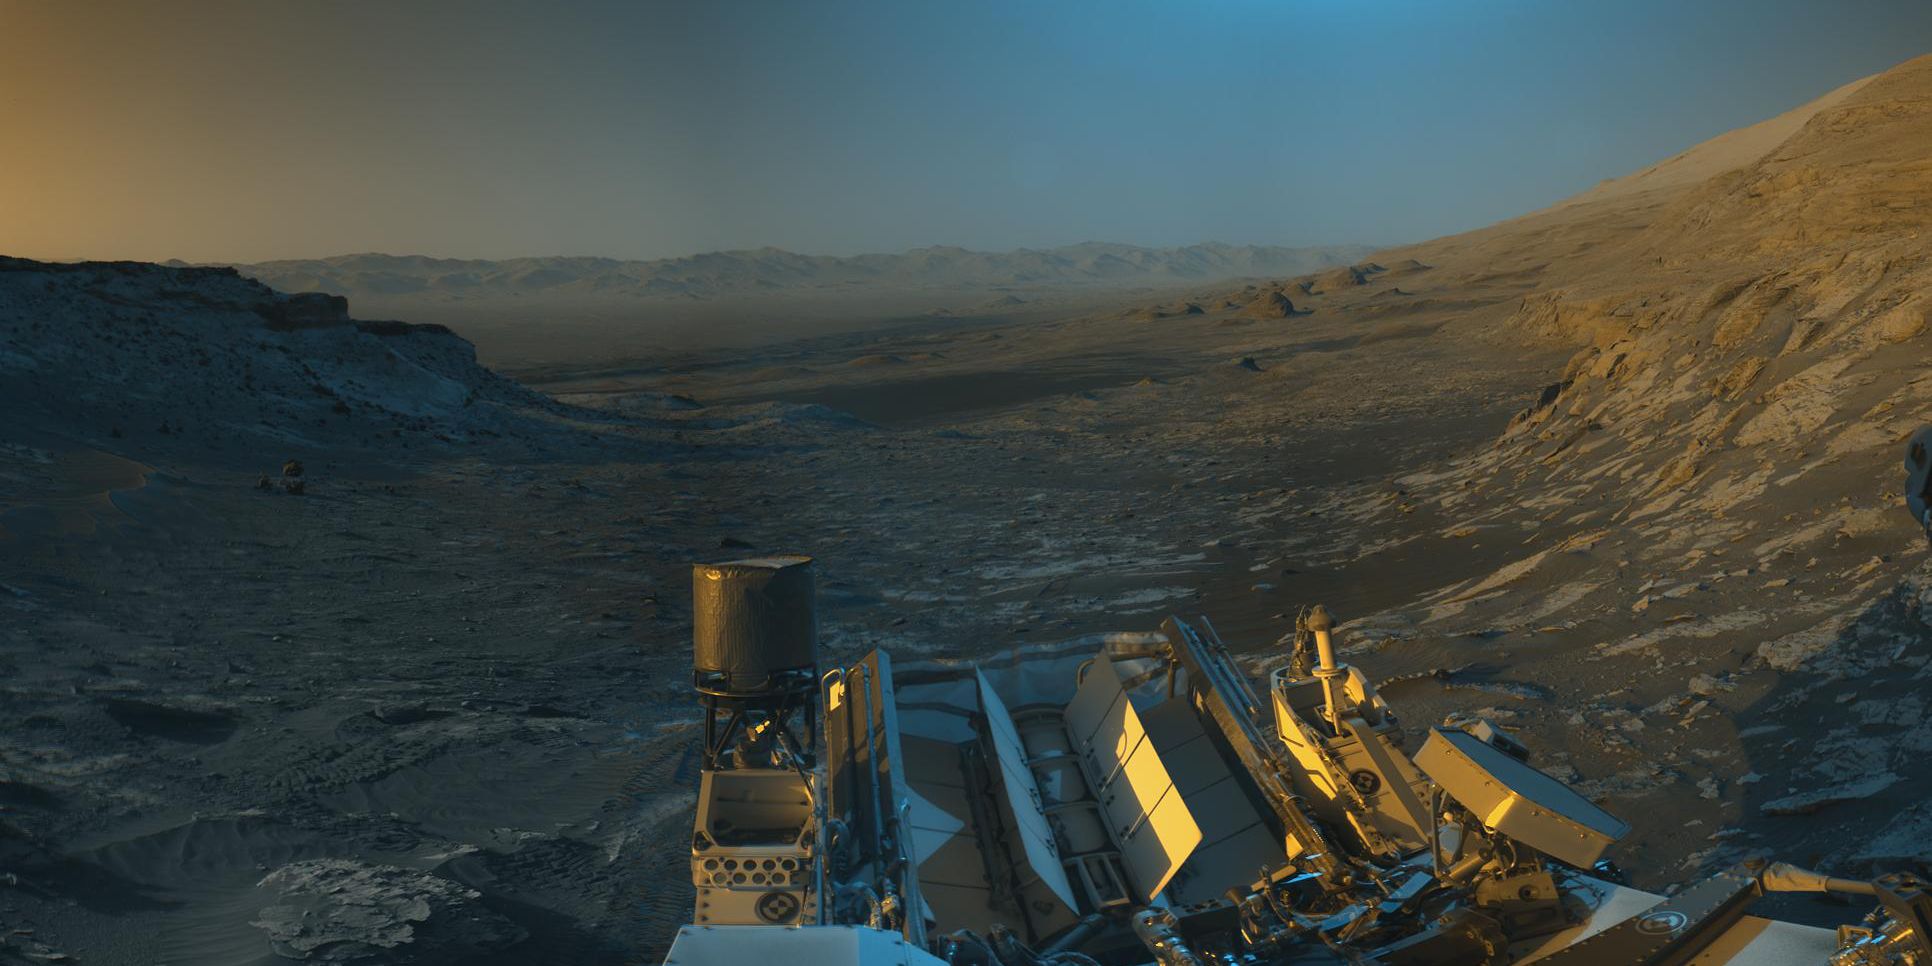 'Mars postcard' photo captured by Curiosity